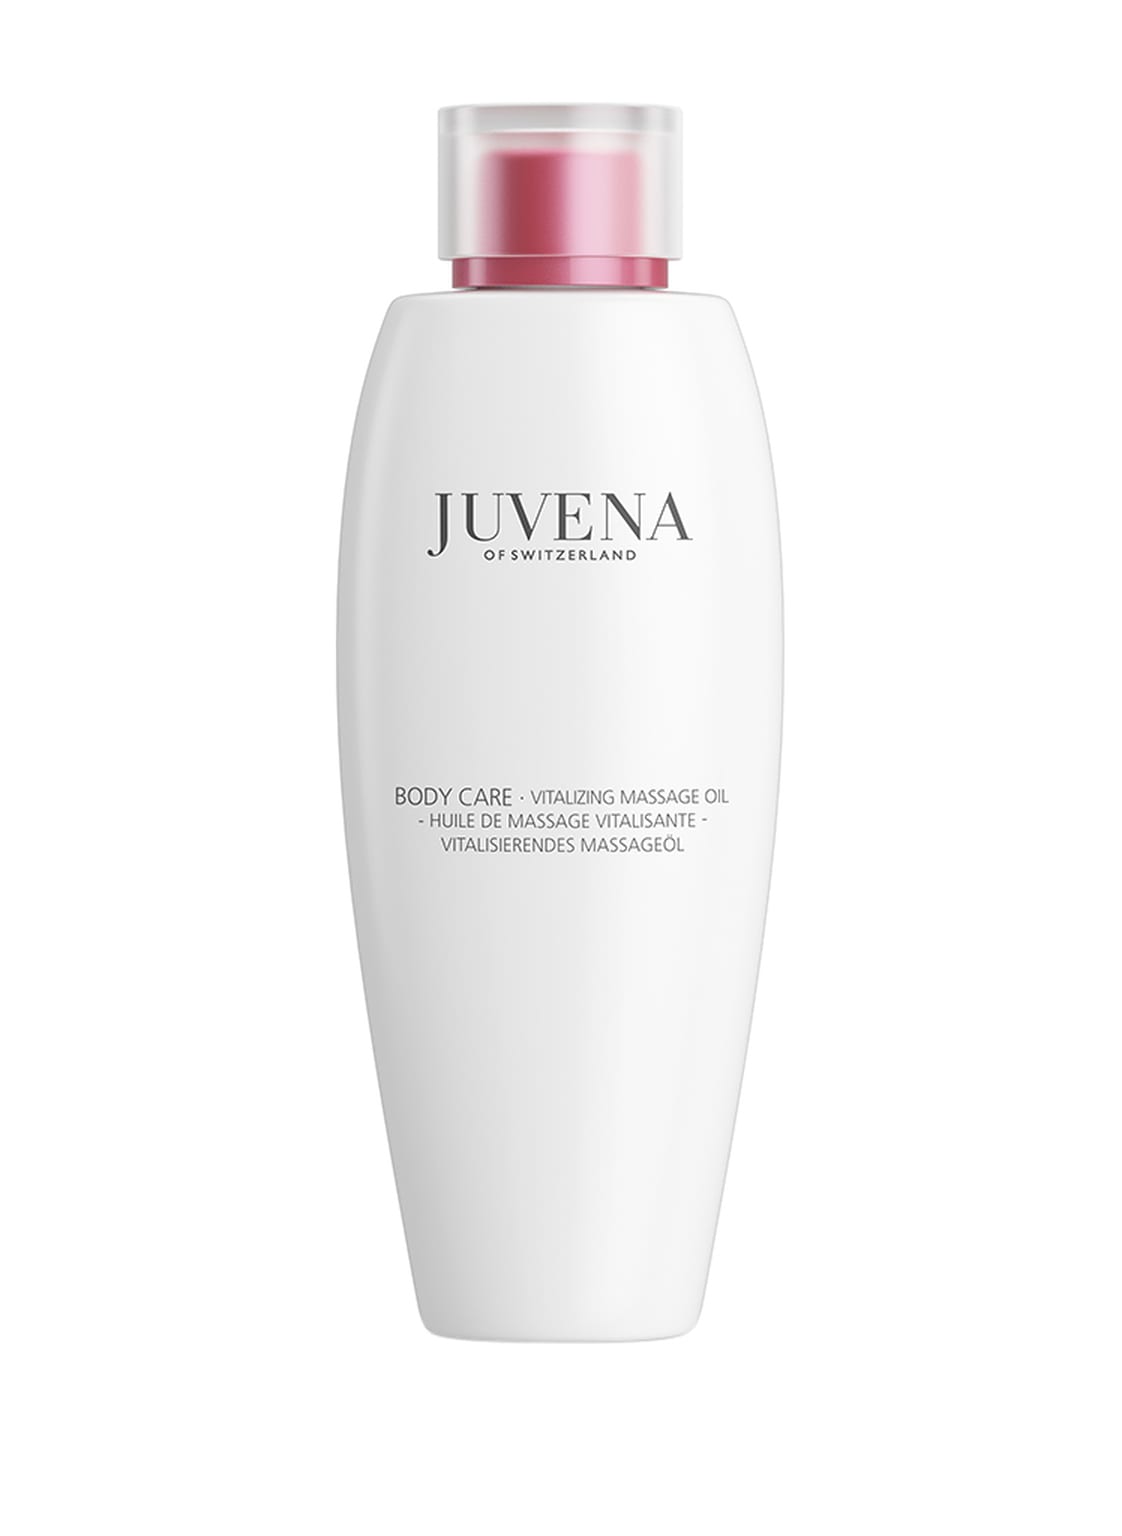 Juvena Vitalizing Massage Oil Luxury Performance 200 ml von Juvena